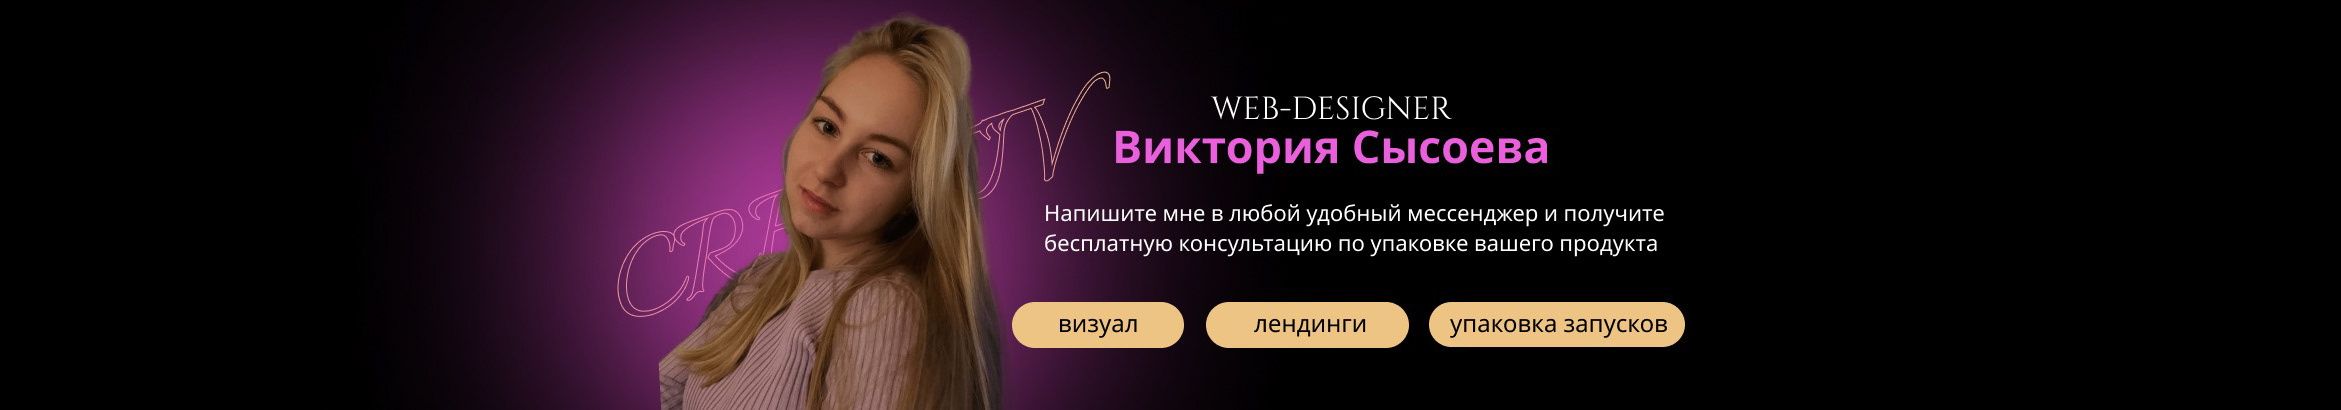 Viktoria Sysoeva profil başlığı